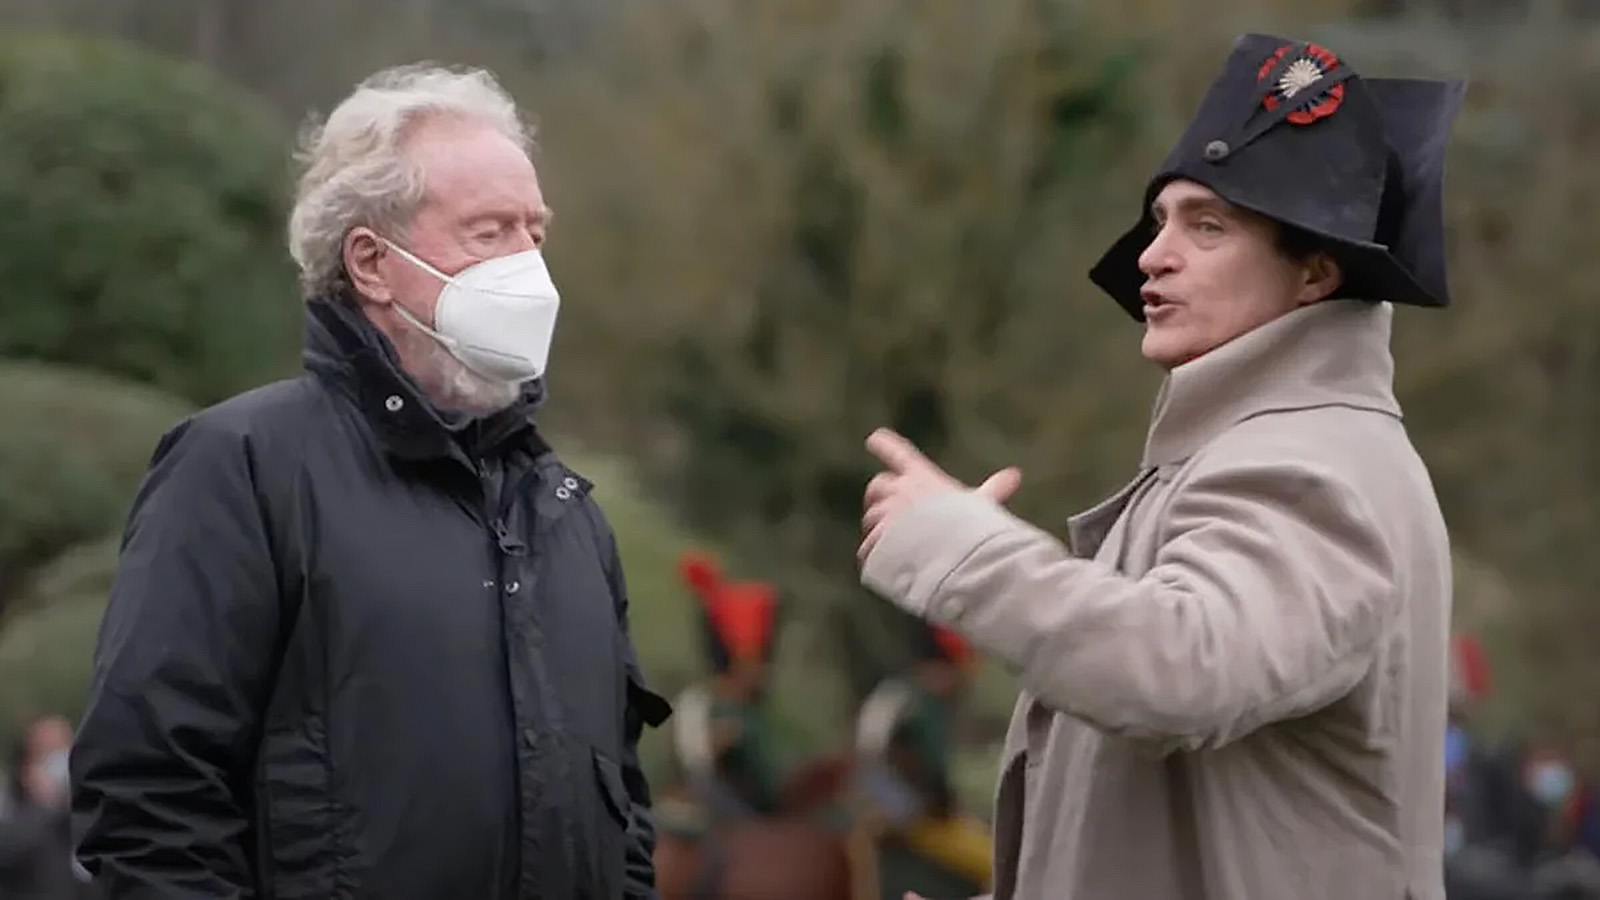 Director Ridley Scott on set with Joaquin Phoenix. Image © Apple